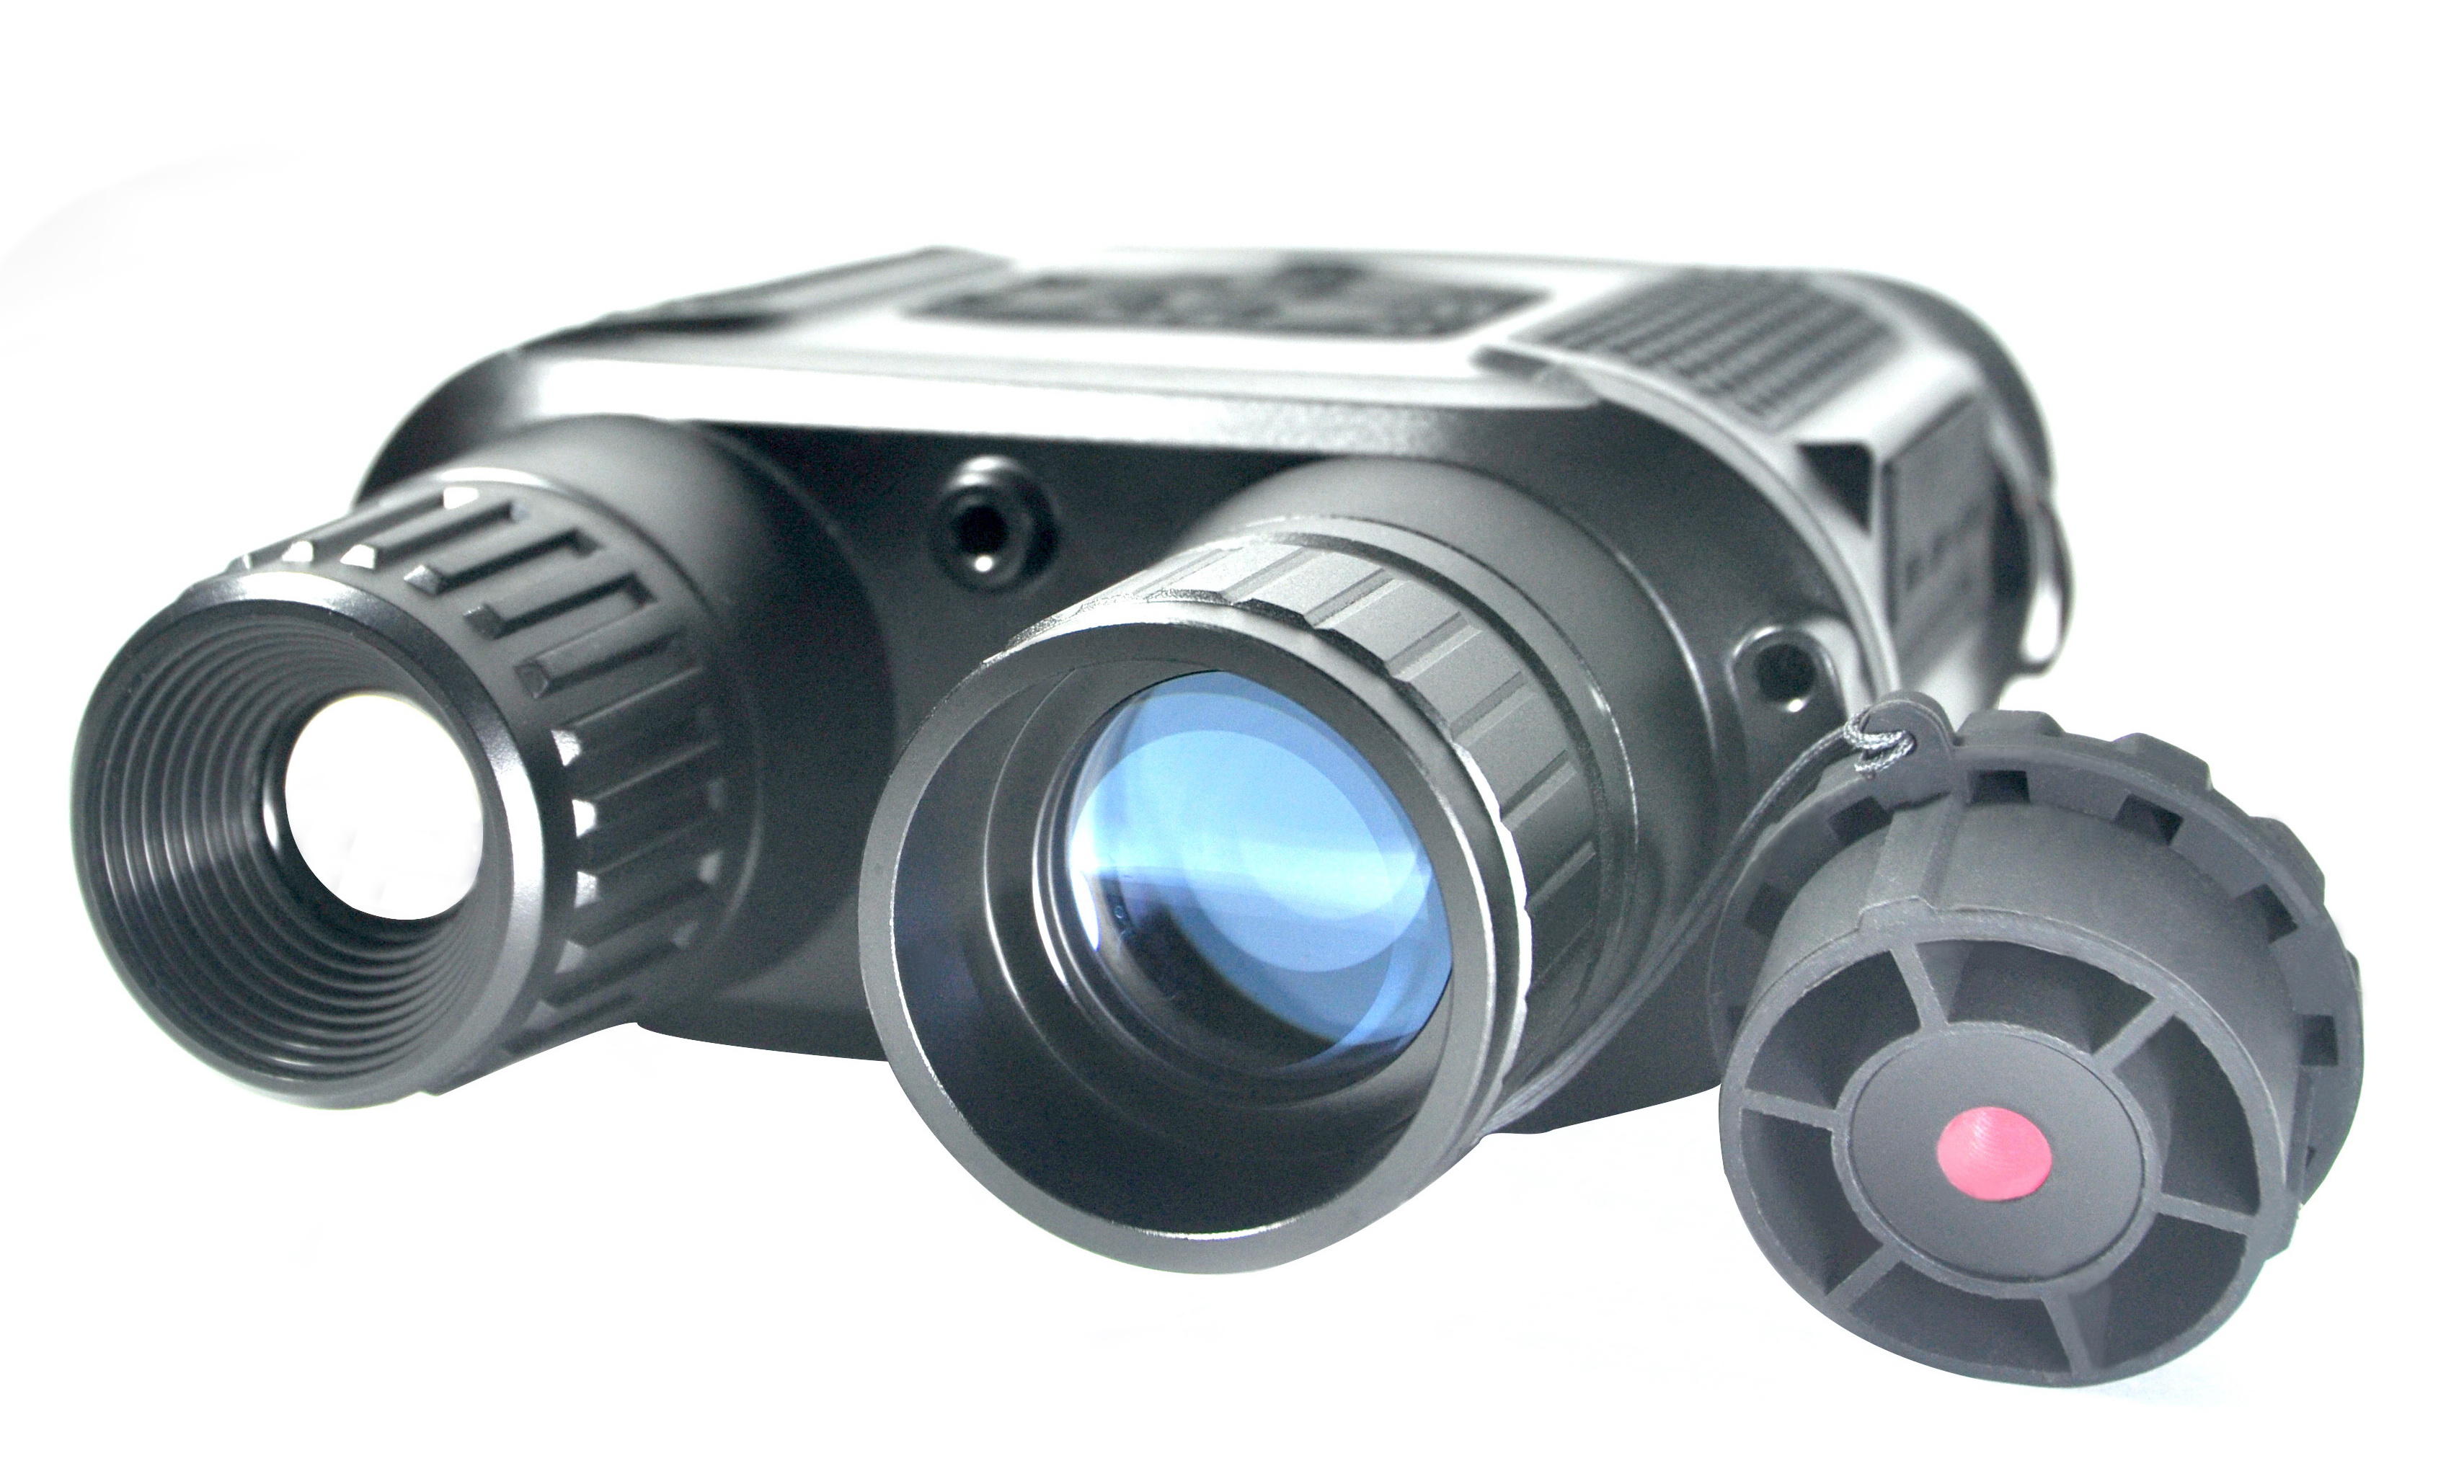 Eyebre-NV-800-7x31-Digital-Night-Vision-Telescope-Binocular-400m-Wide-Dynamic-Range-Takes-720p-Video-1194347